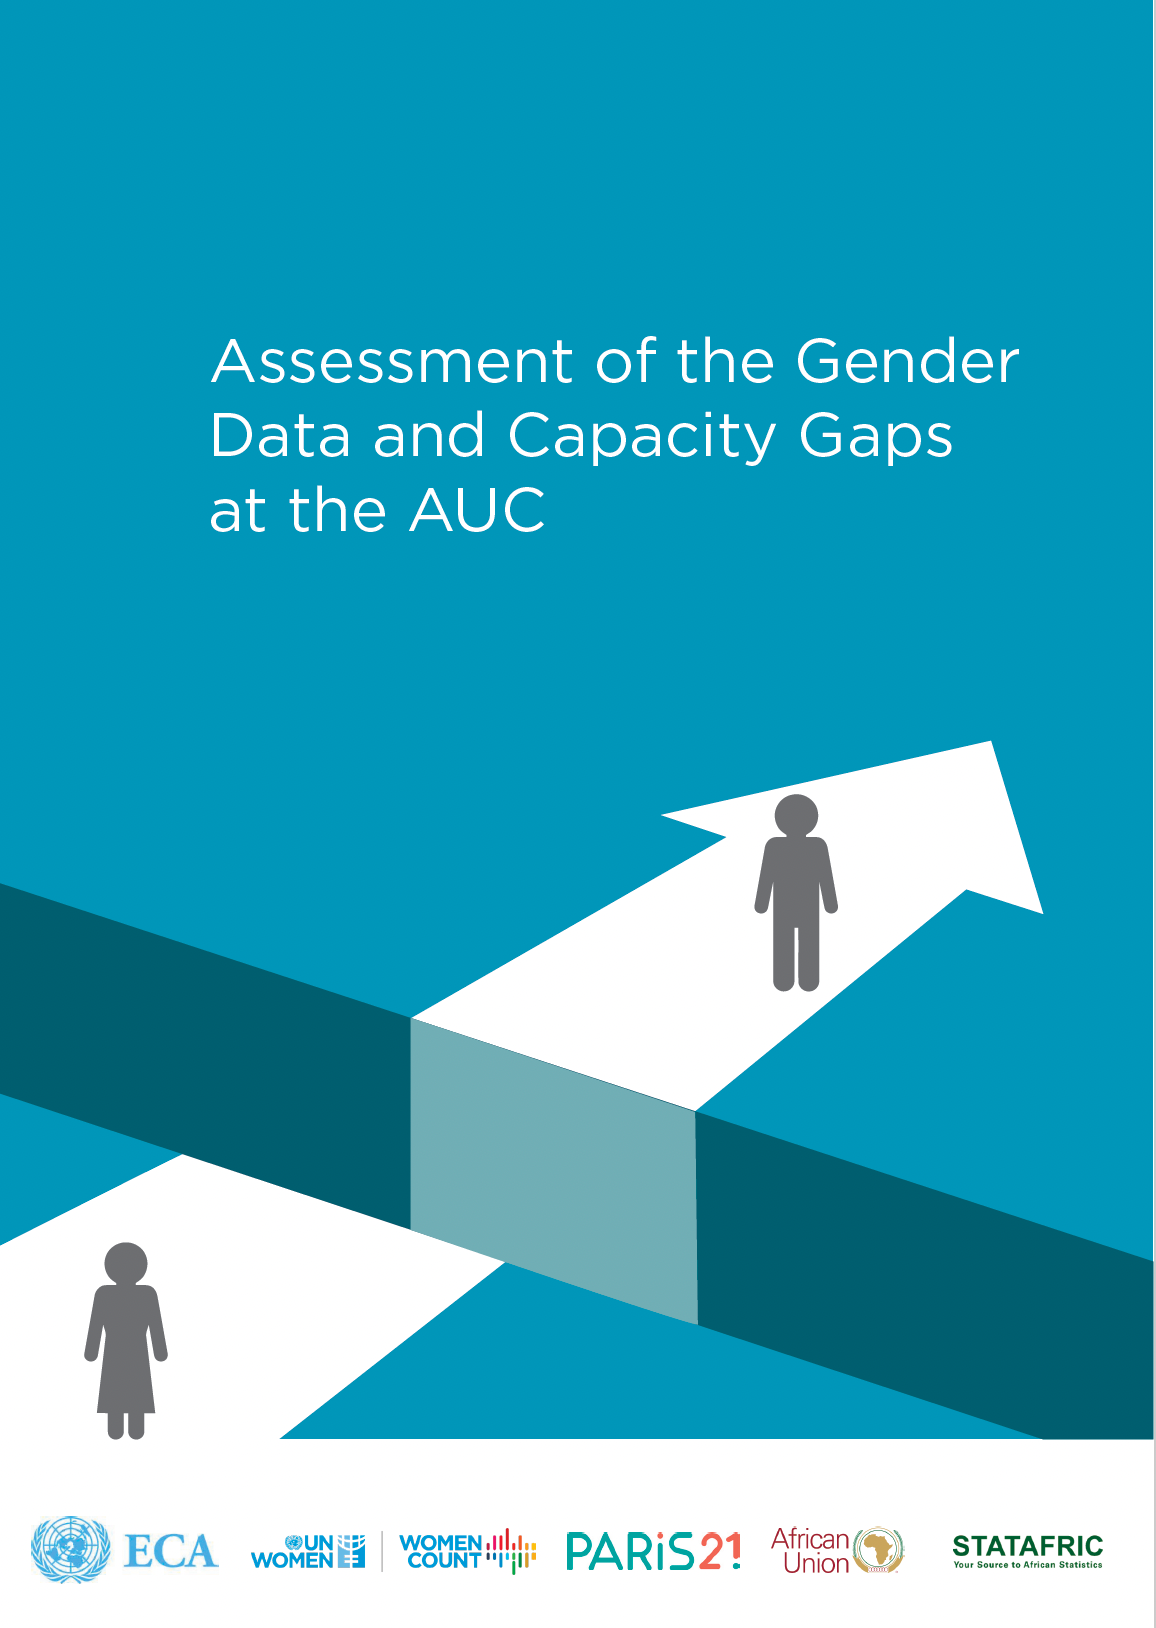 Assessment of gender data and capacity gaps 